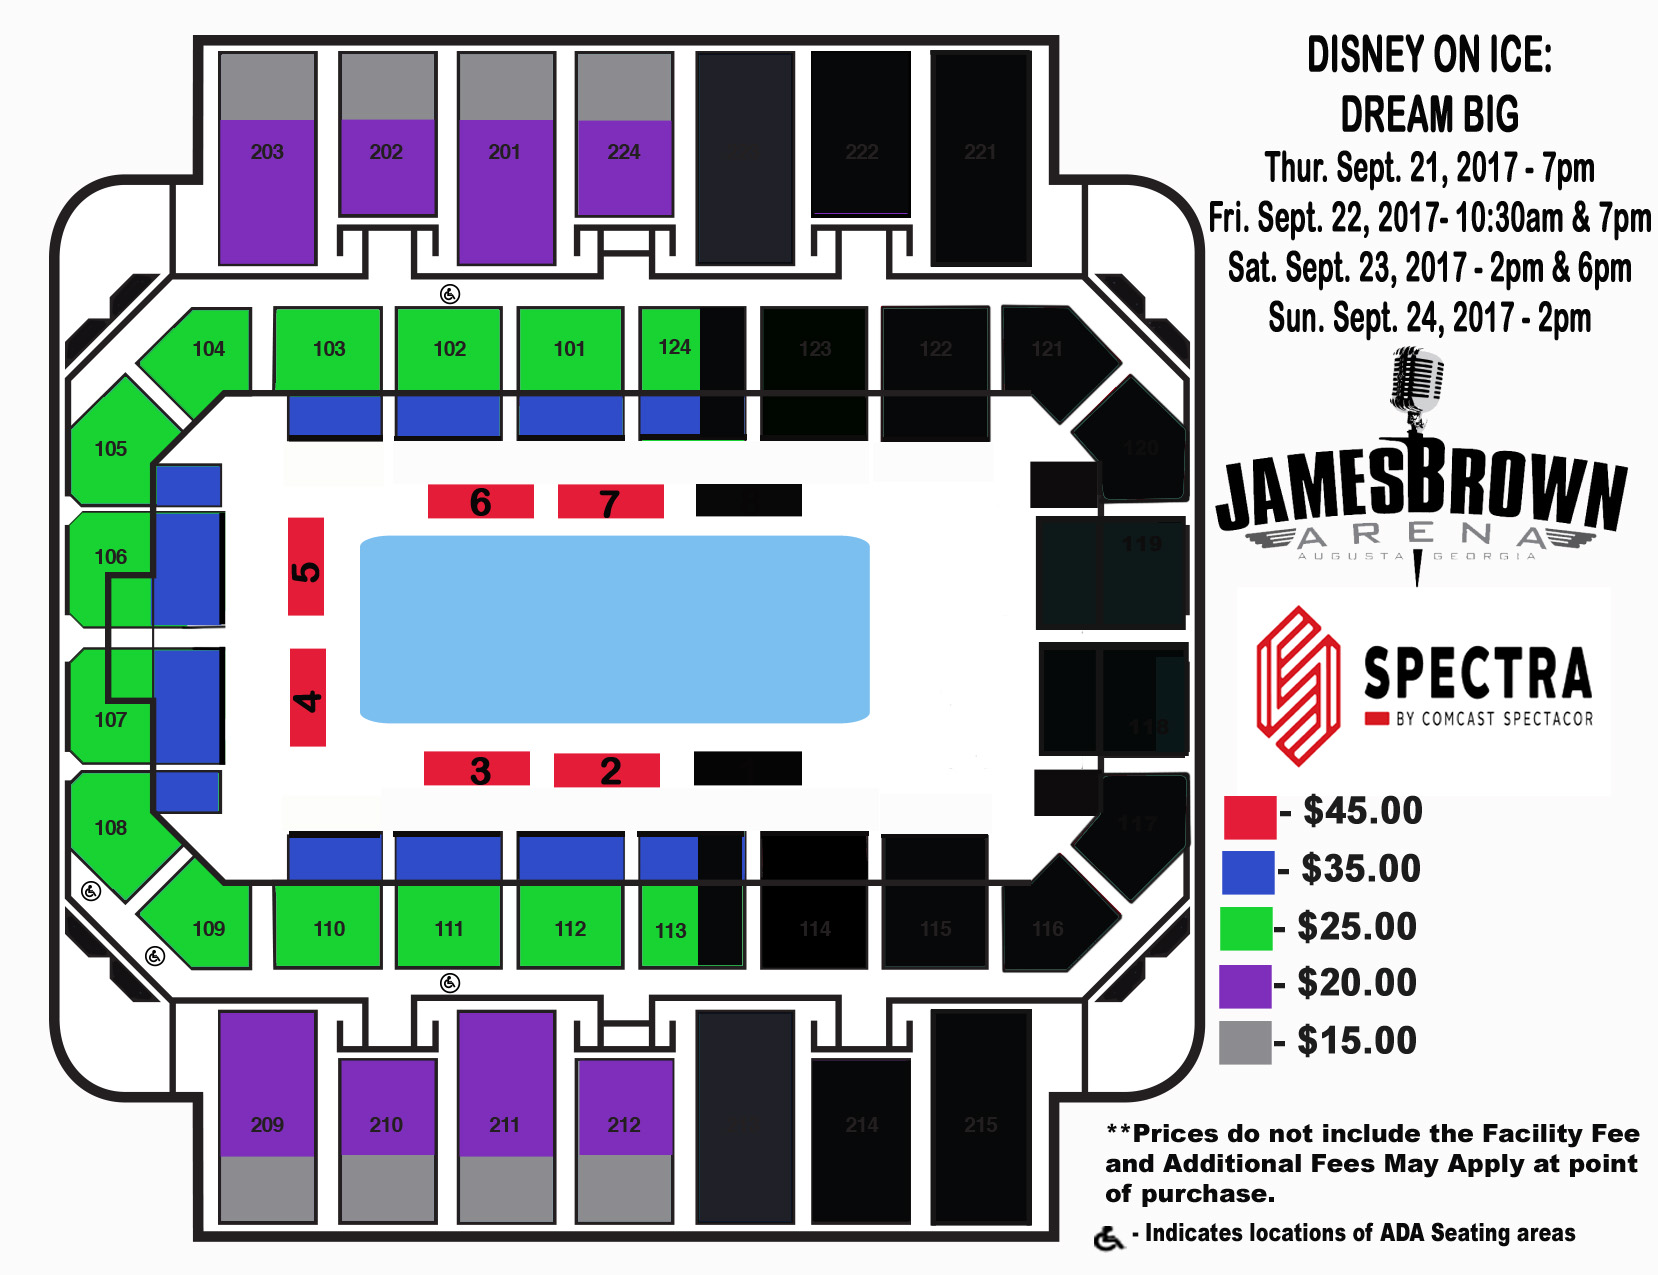 James Brown Arena Seating Diagram - Catalogue of Schemas